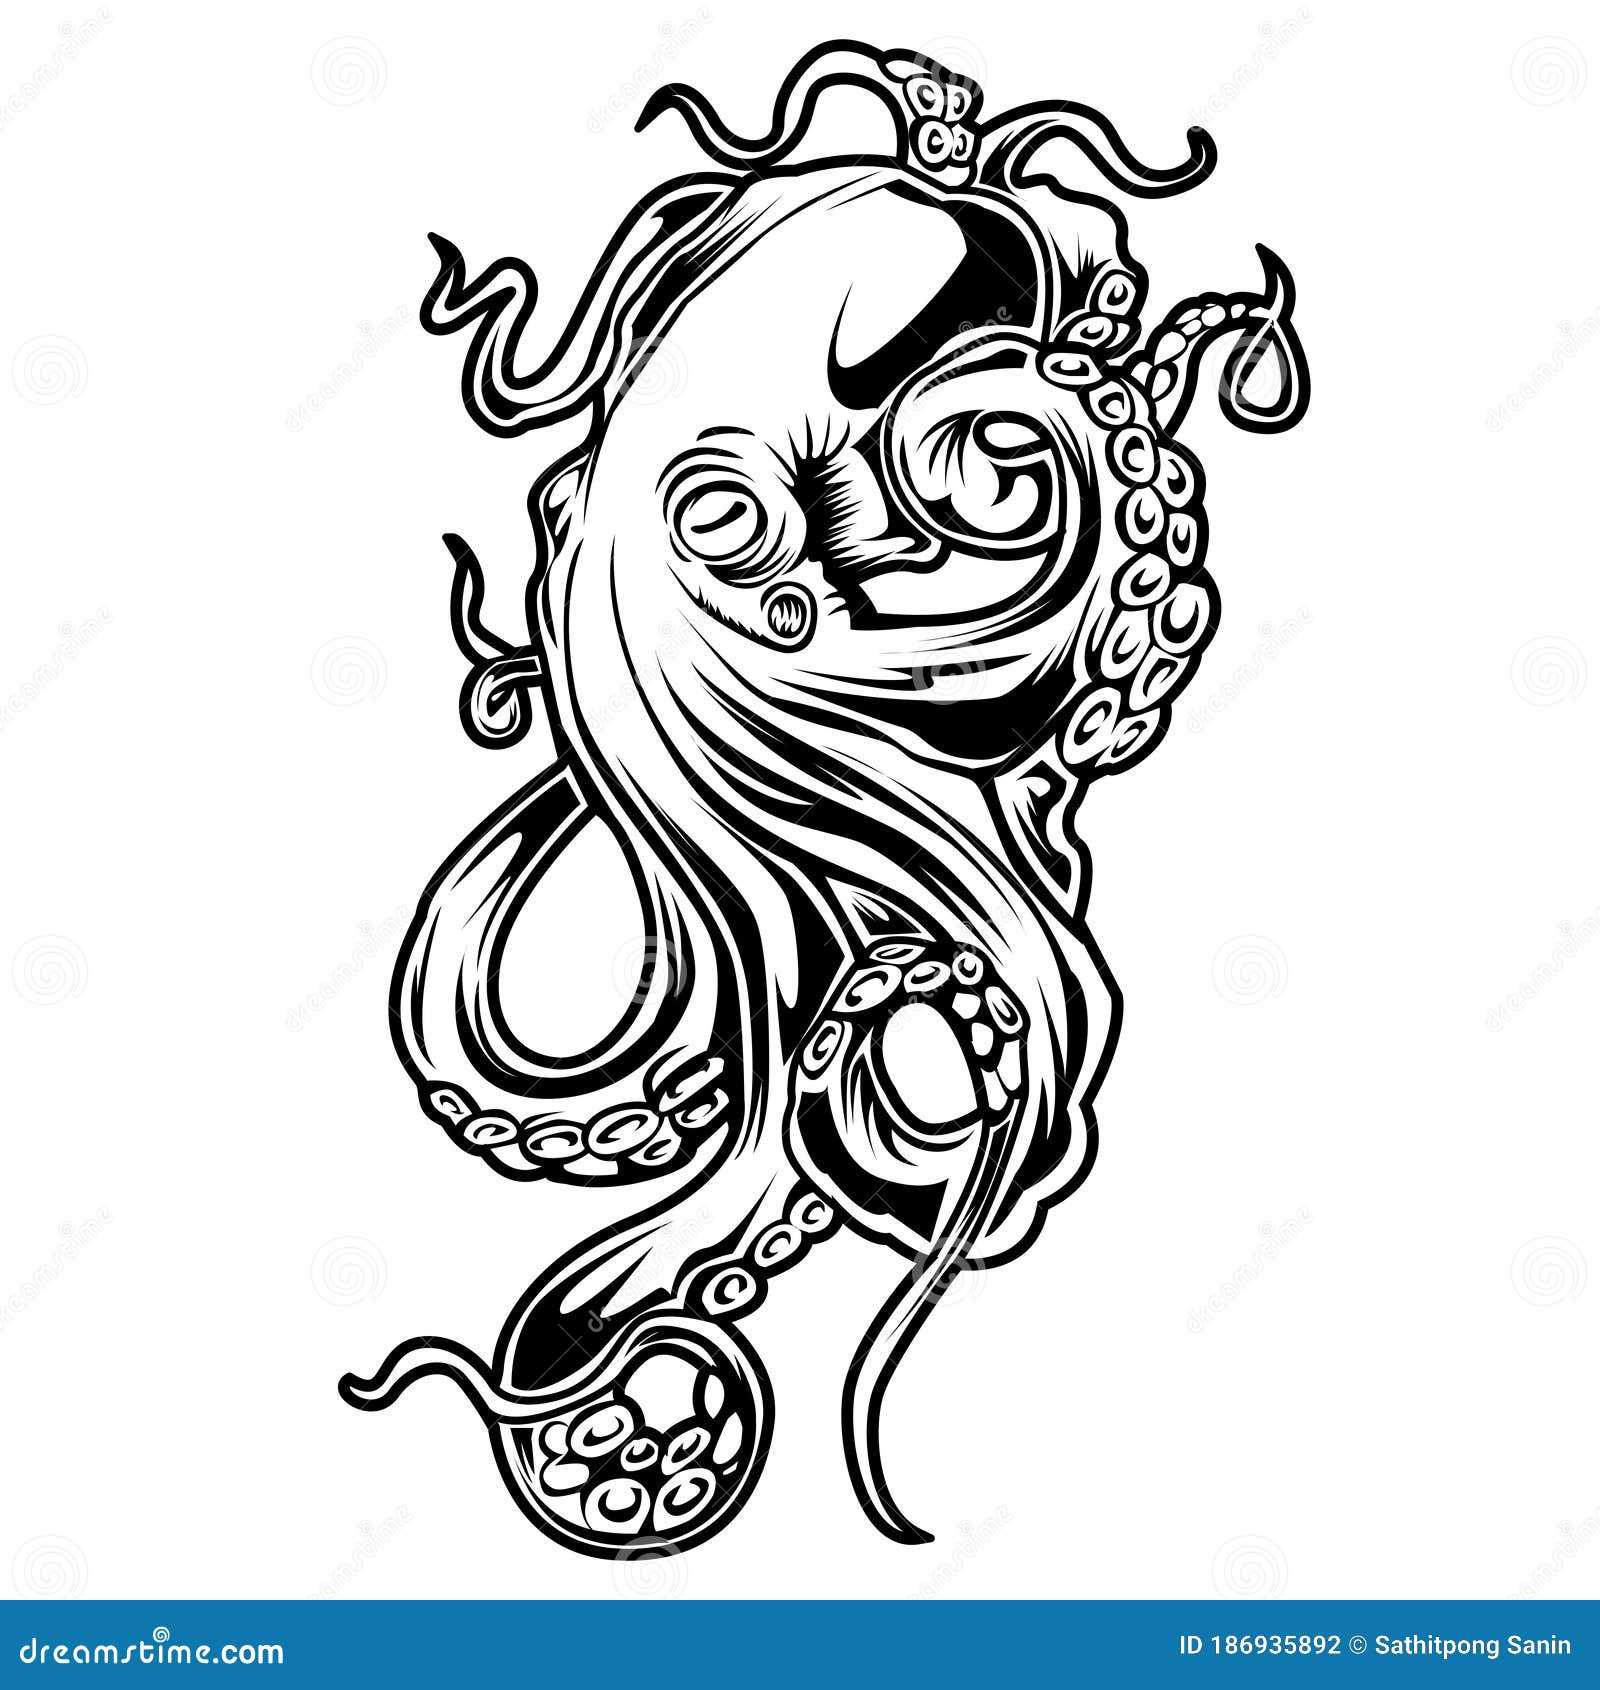 Octopus Sea Drawing Tattoo Vector Illustrtion 4 Stock Vector  Illustration  of male office 186935892